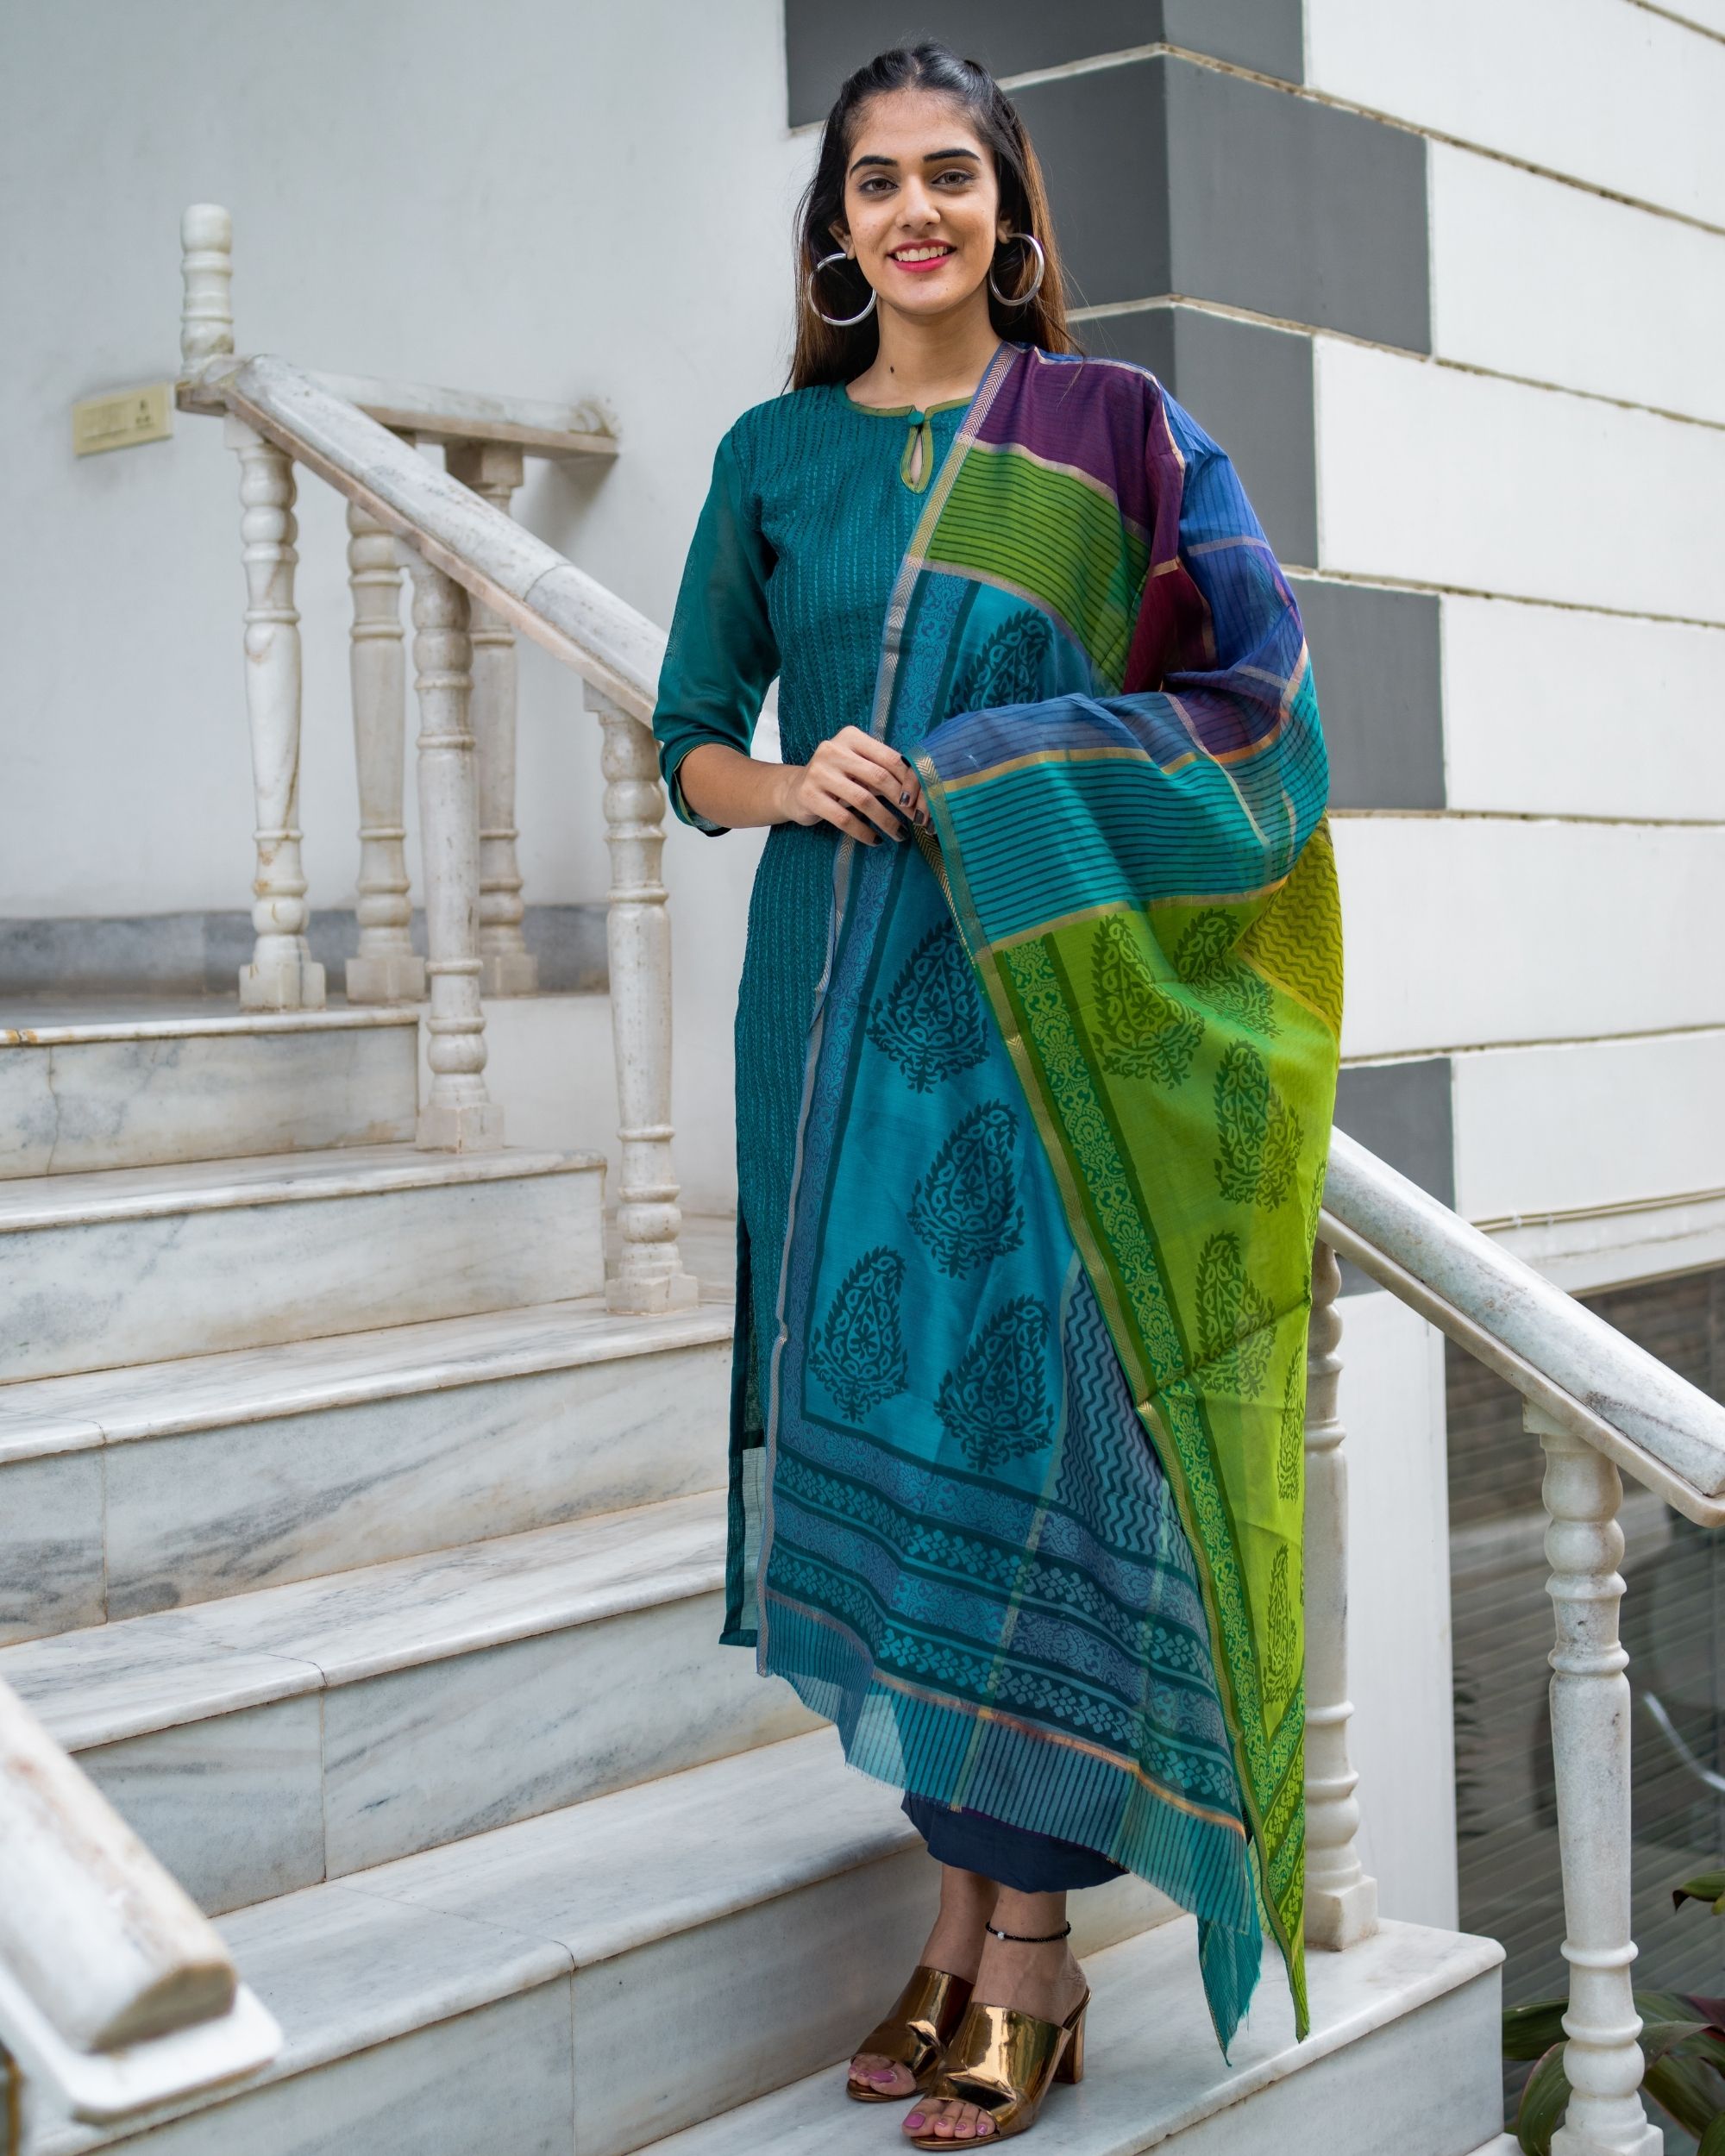 Peacock Blue Designer Embroidered Wedding Anarkali Suit | Saira's Boutique